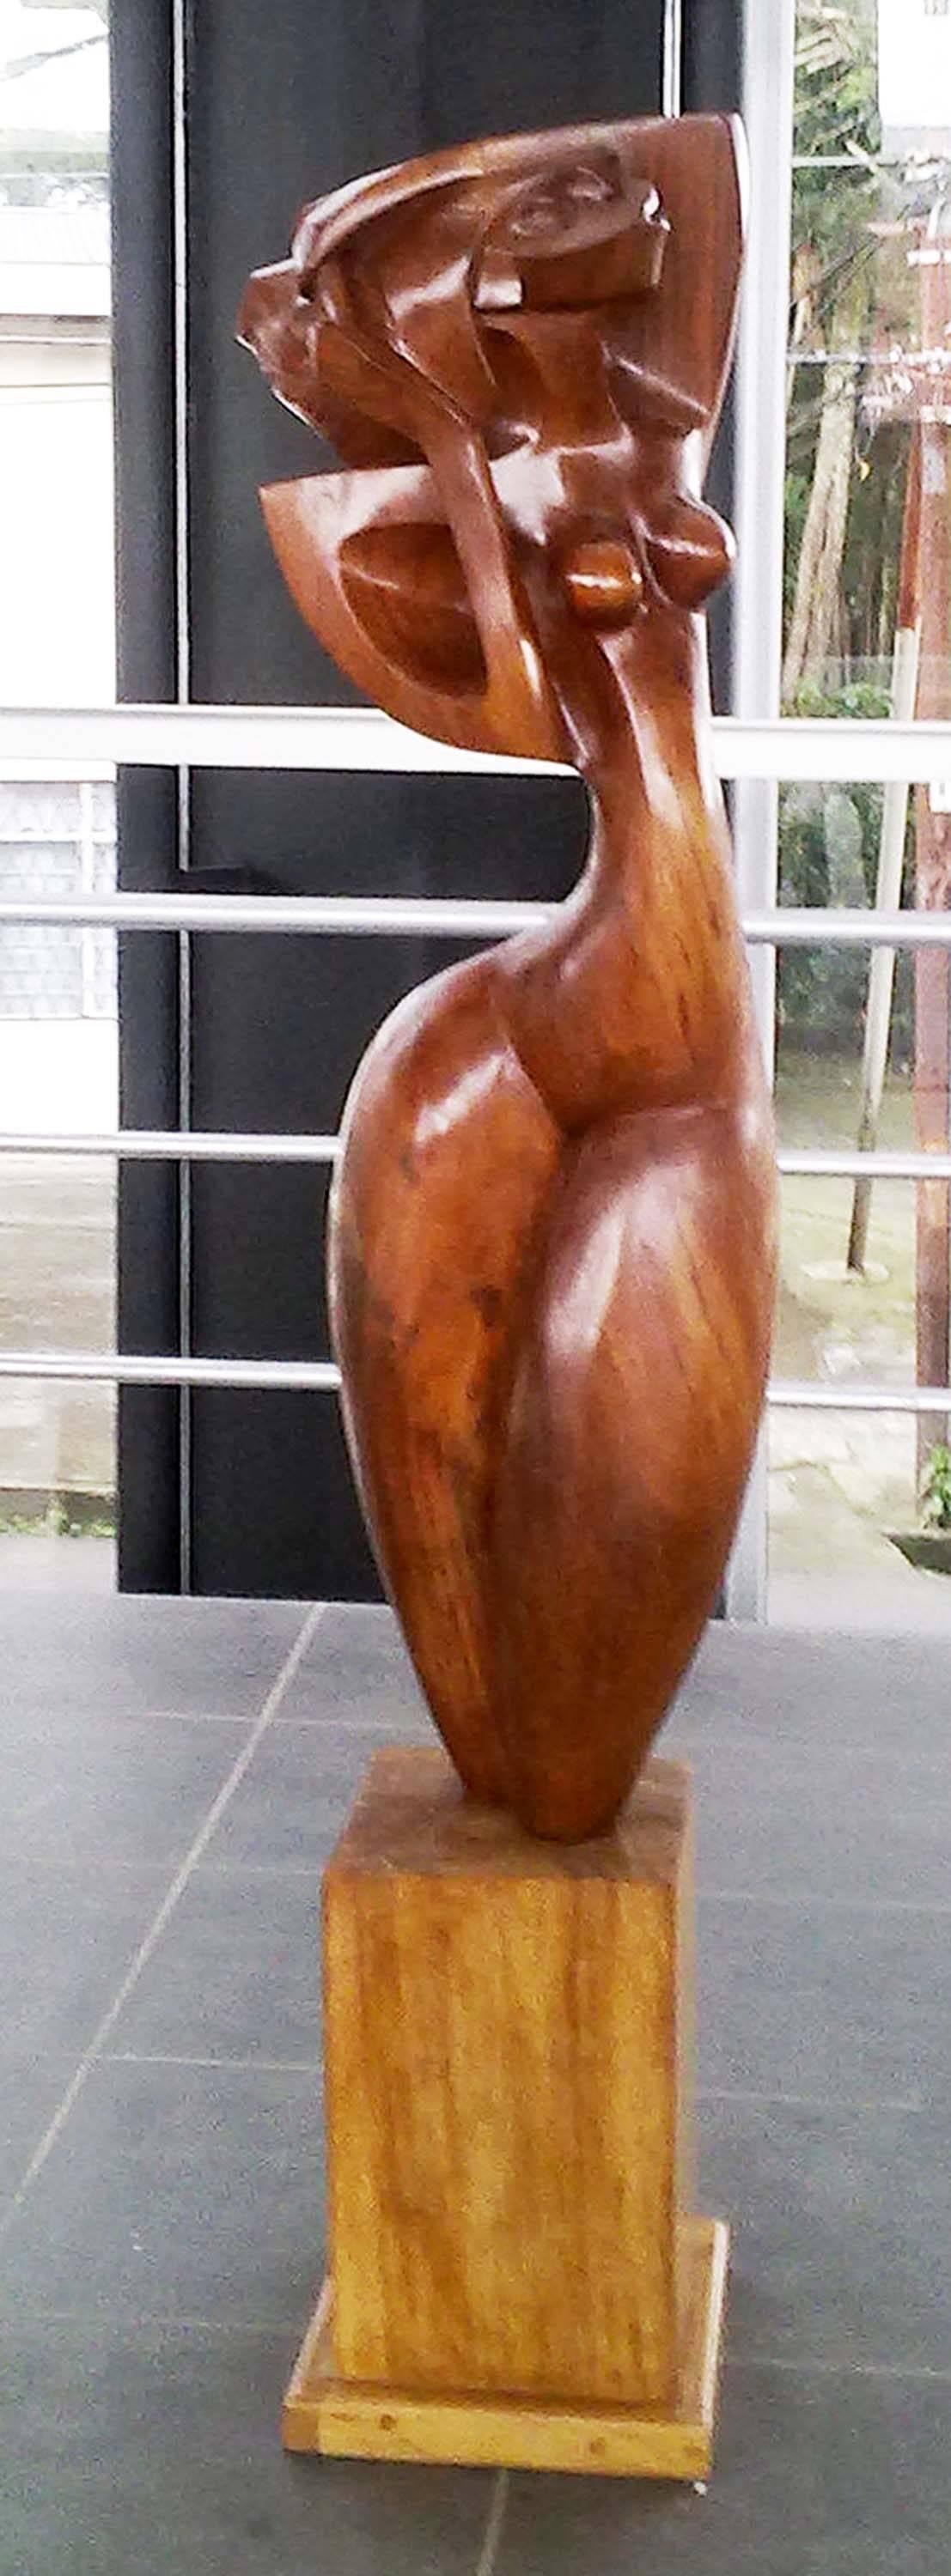 Ulises Jimenez Obregon Nude Sculpture – Erwähnungen des Künstlers